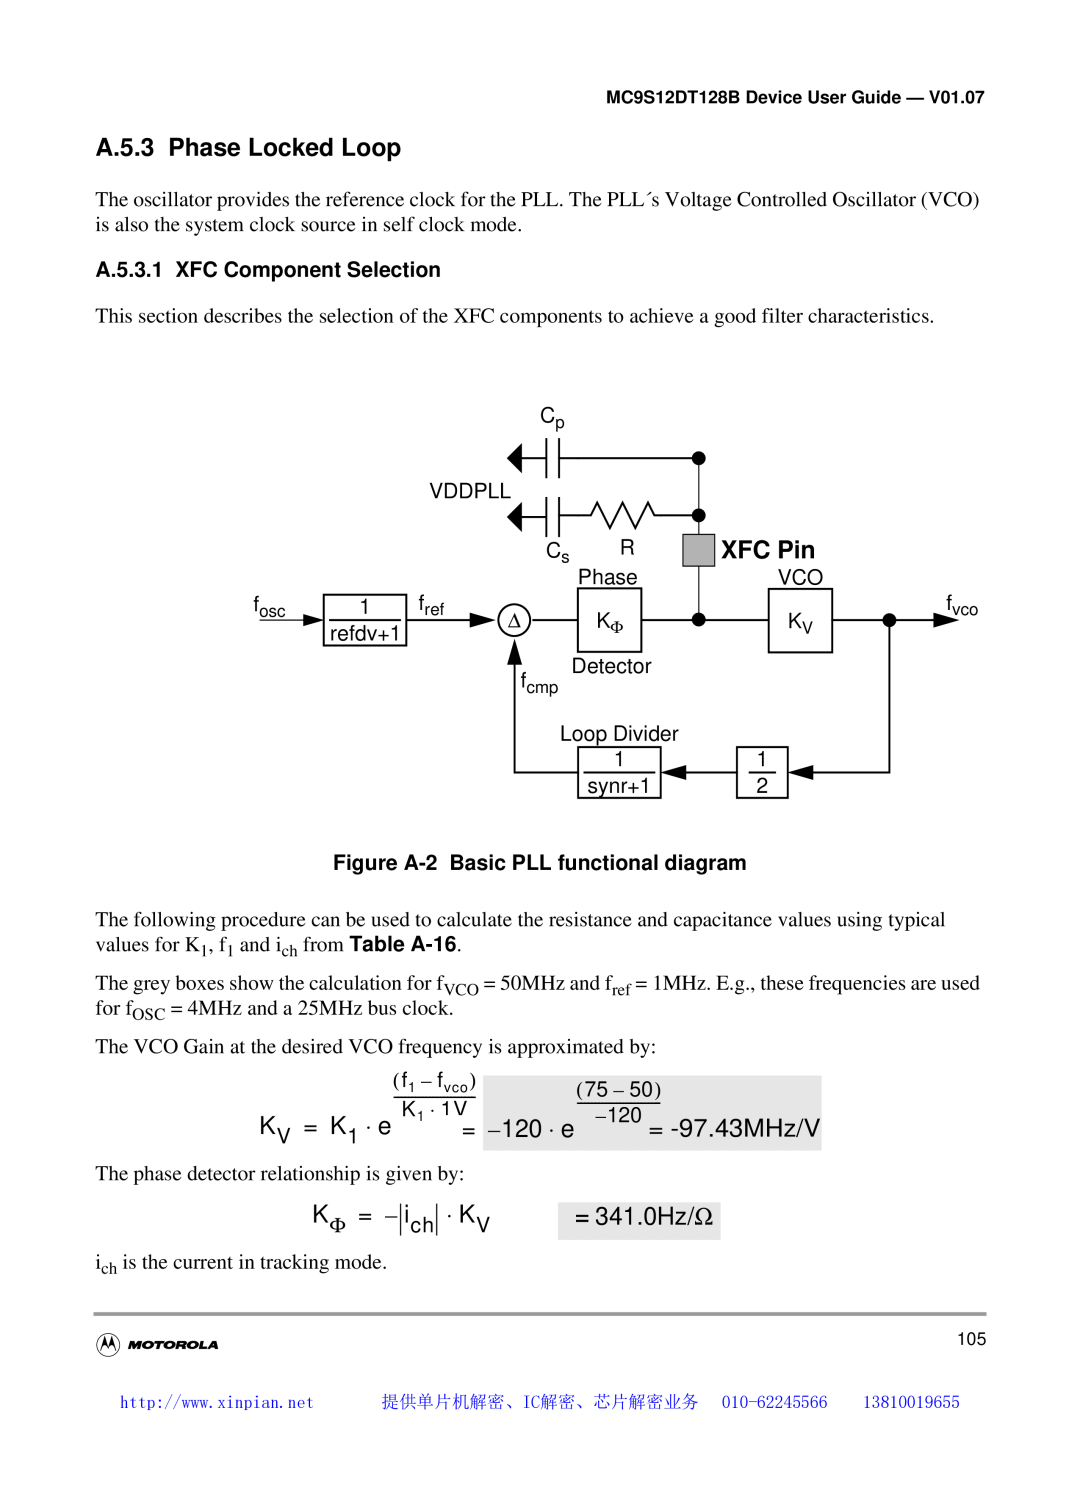 Motorola MC9S12DB128B manual A.5.3 Phase Locked Loop, XFC Pin, K V = K 1 ⋅ e, KΦ = -ich ⋅ KV, 120 = -97.43MHz/V = 341.0Hz/Ω 